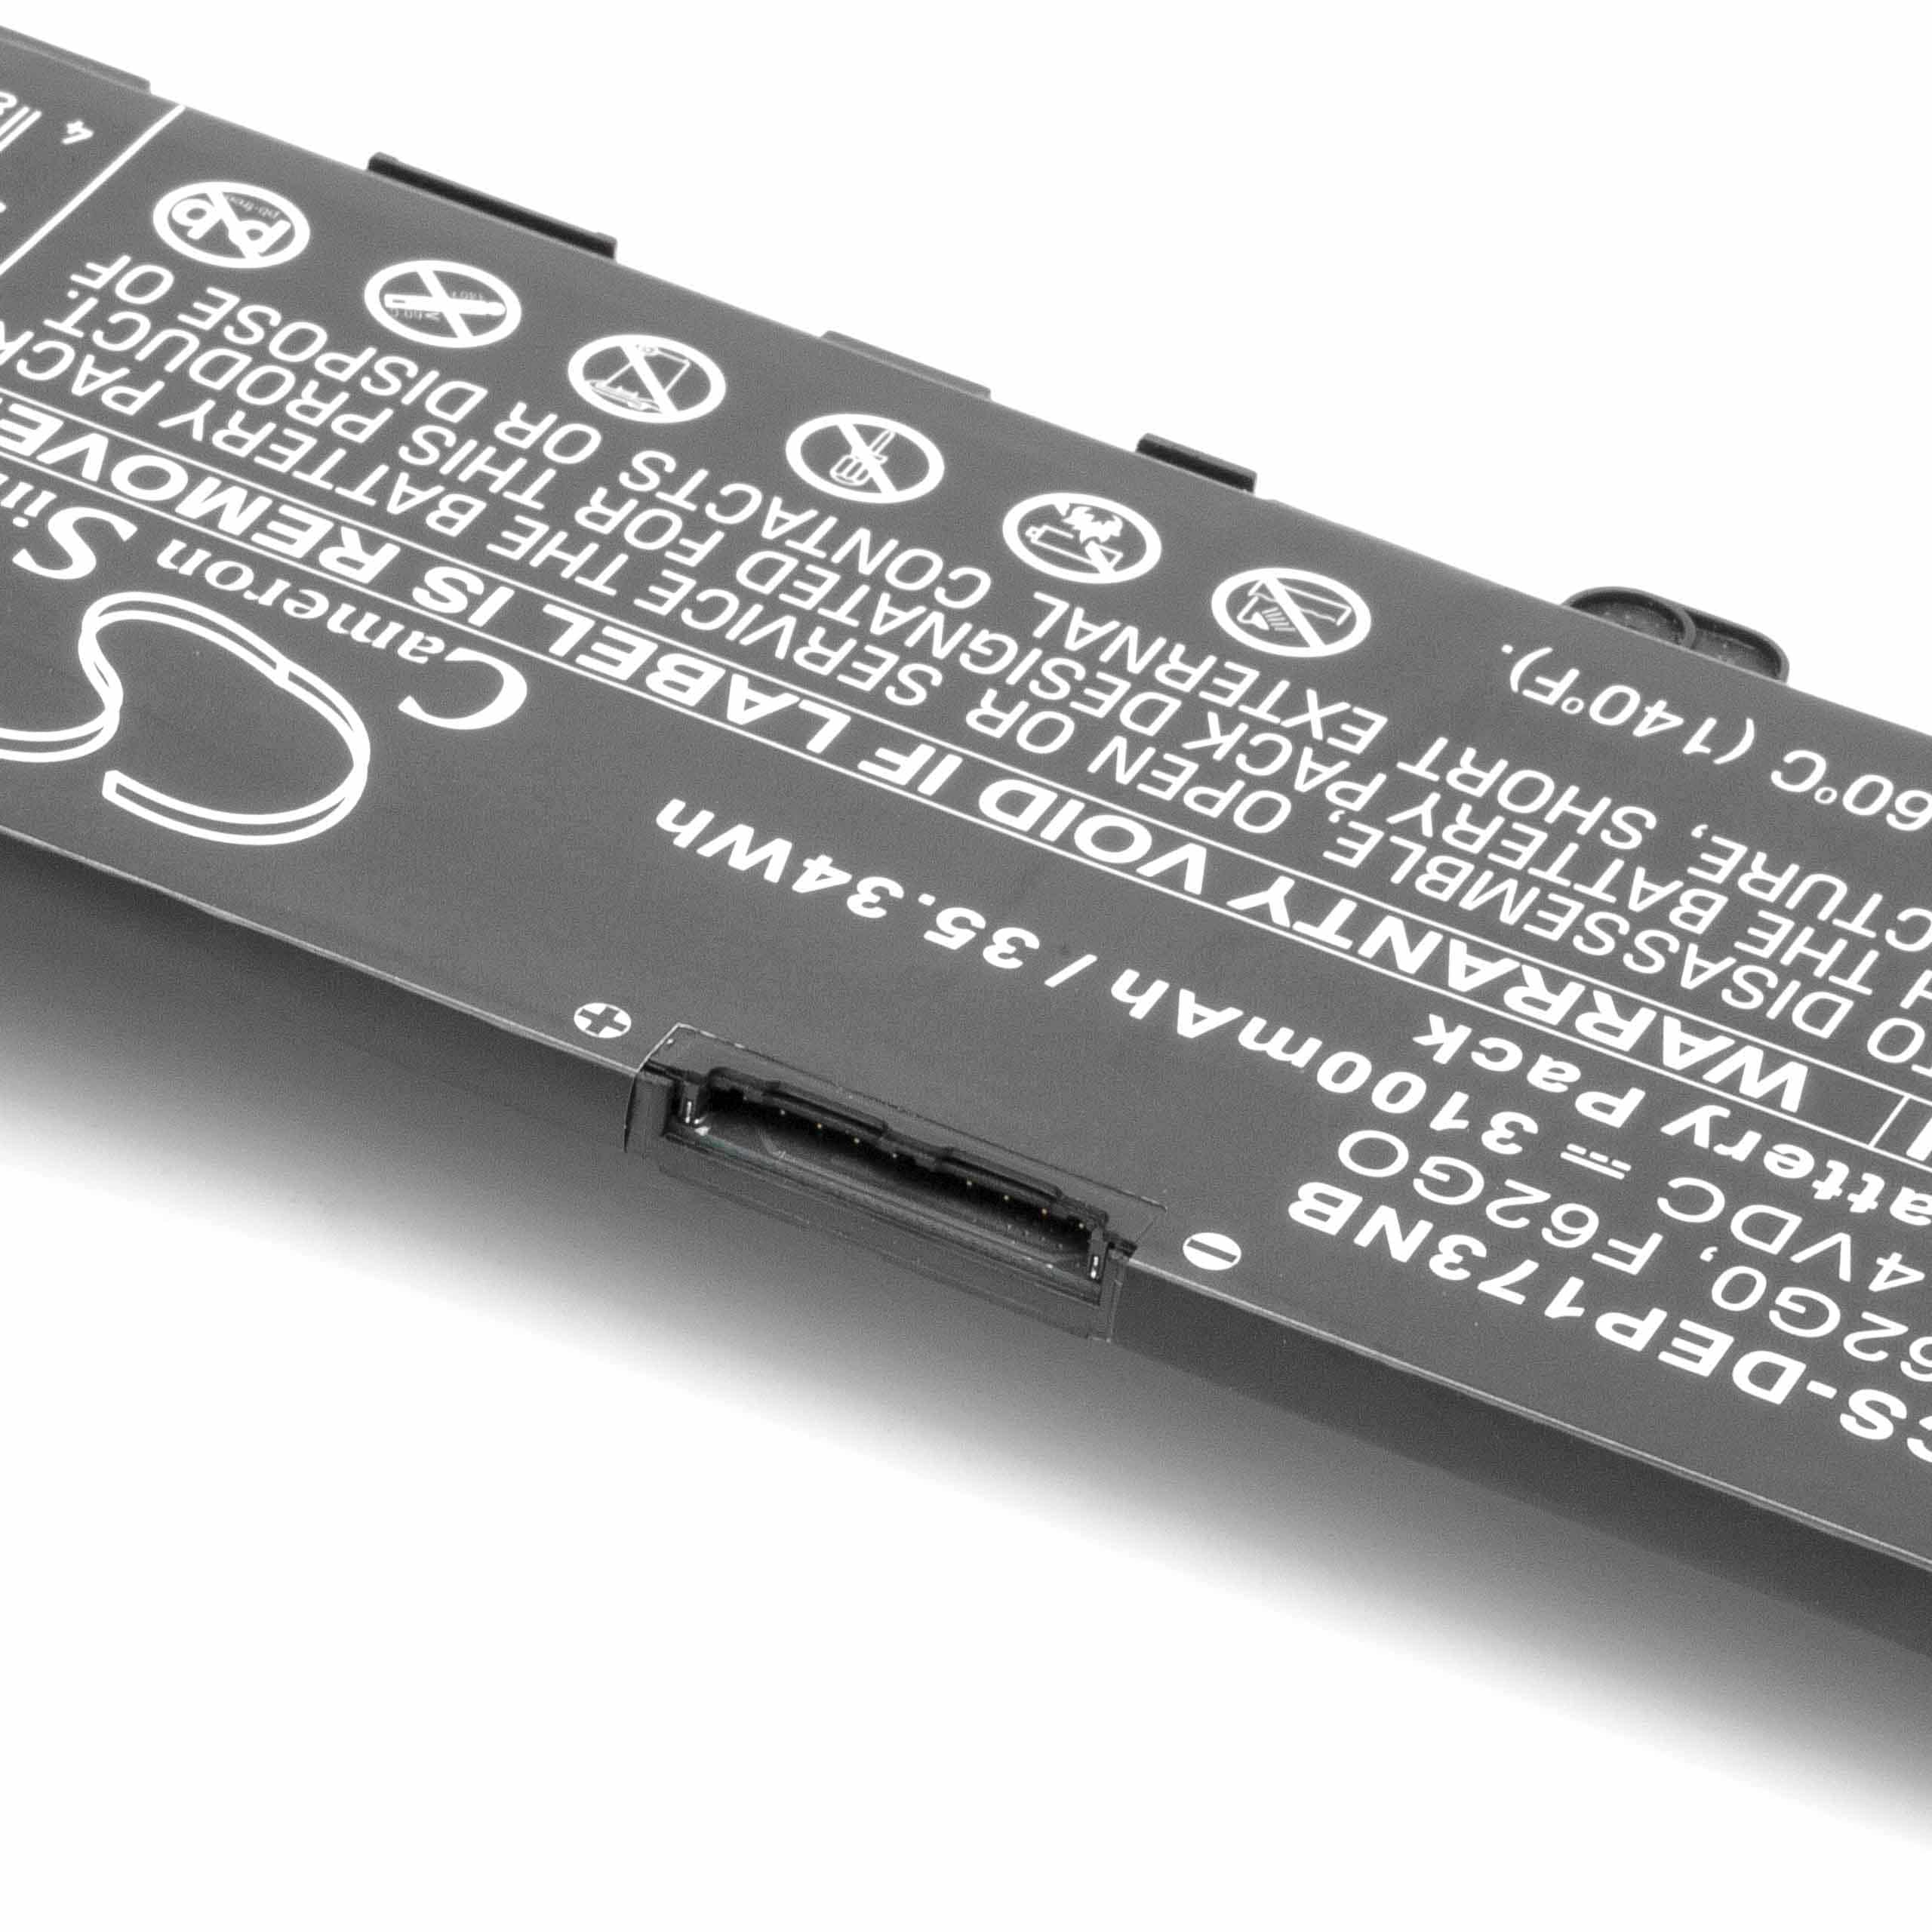 Akumulator do laptopa zamiennik Dell 39DY5, F62GO, F62G0, 0RPJC3, 039DY5 - 3100 mAh 11,4 V Li-Ion, czarny